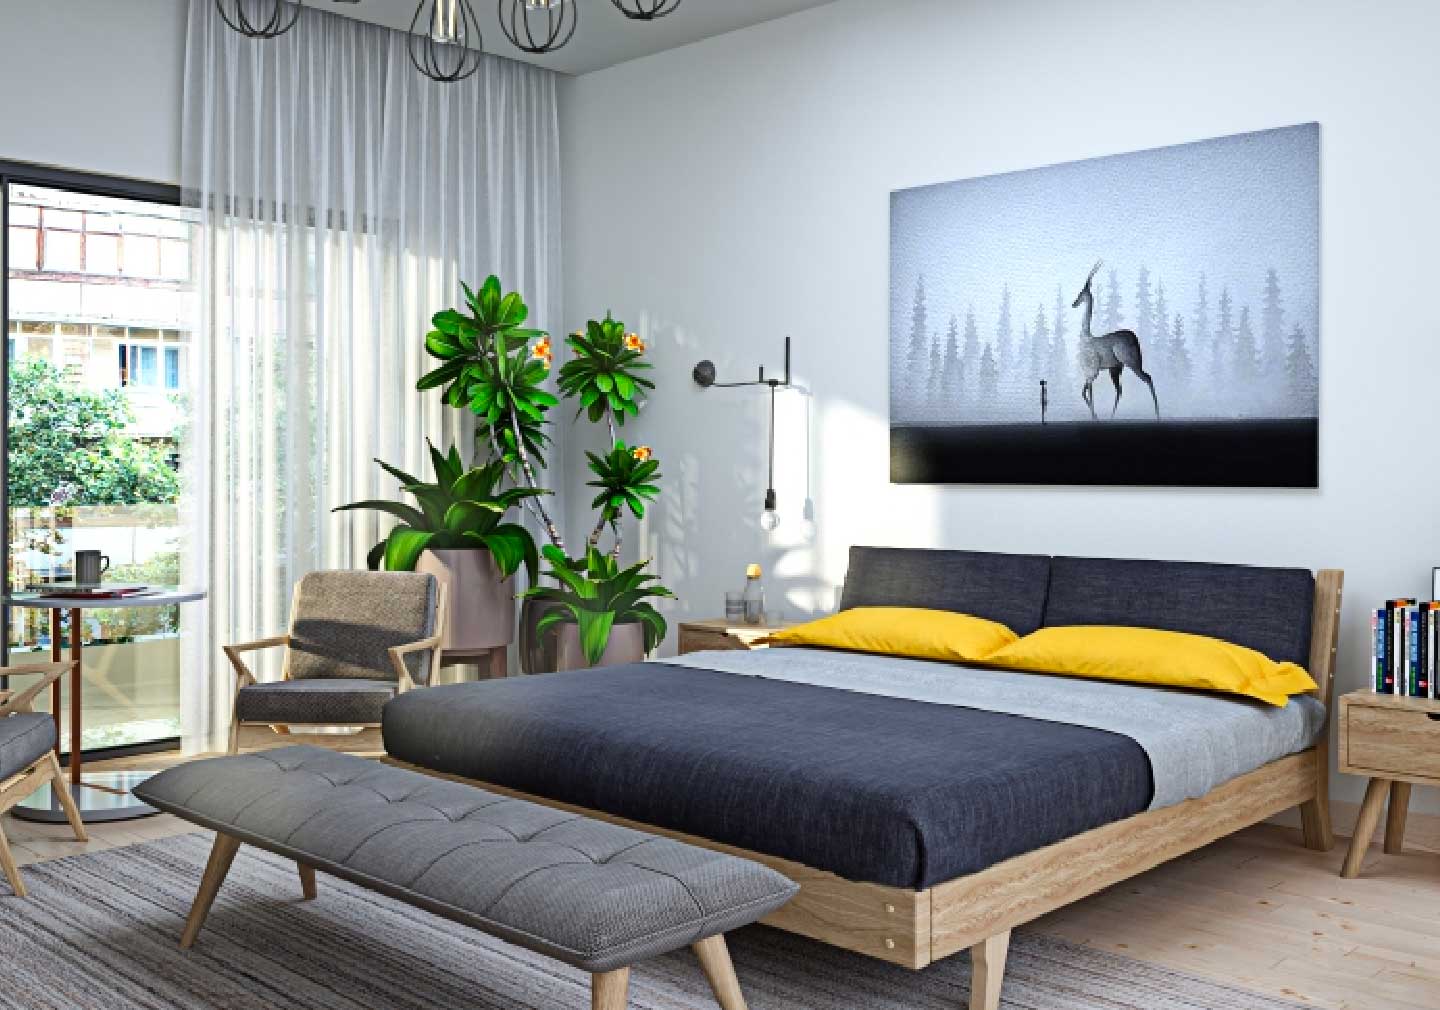 Luxurious Bedroom Interior Designs